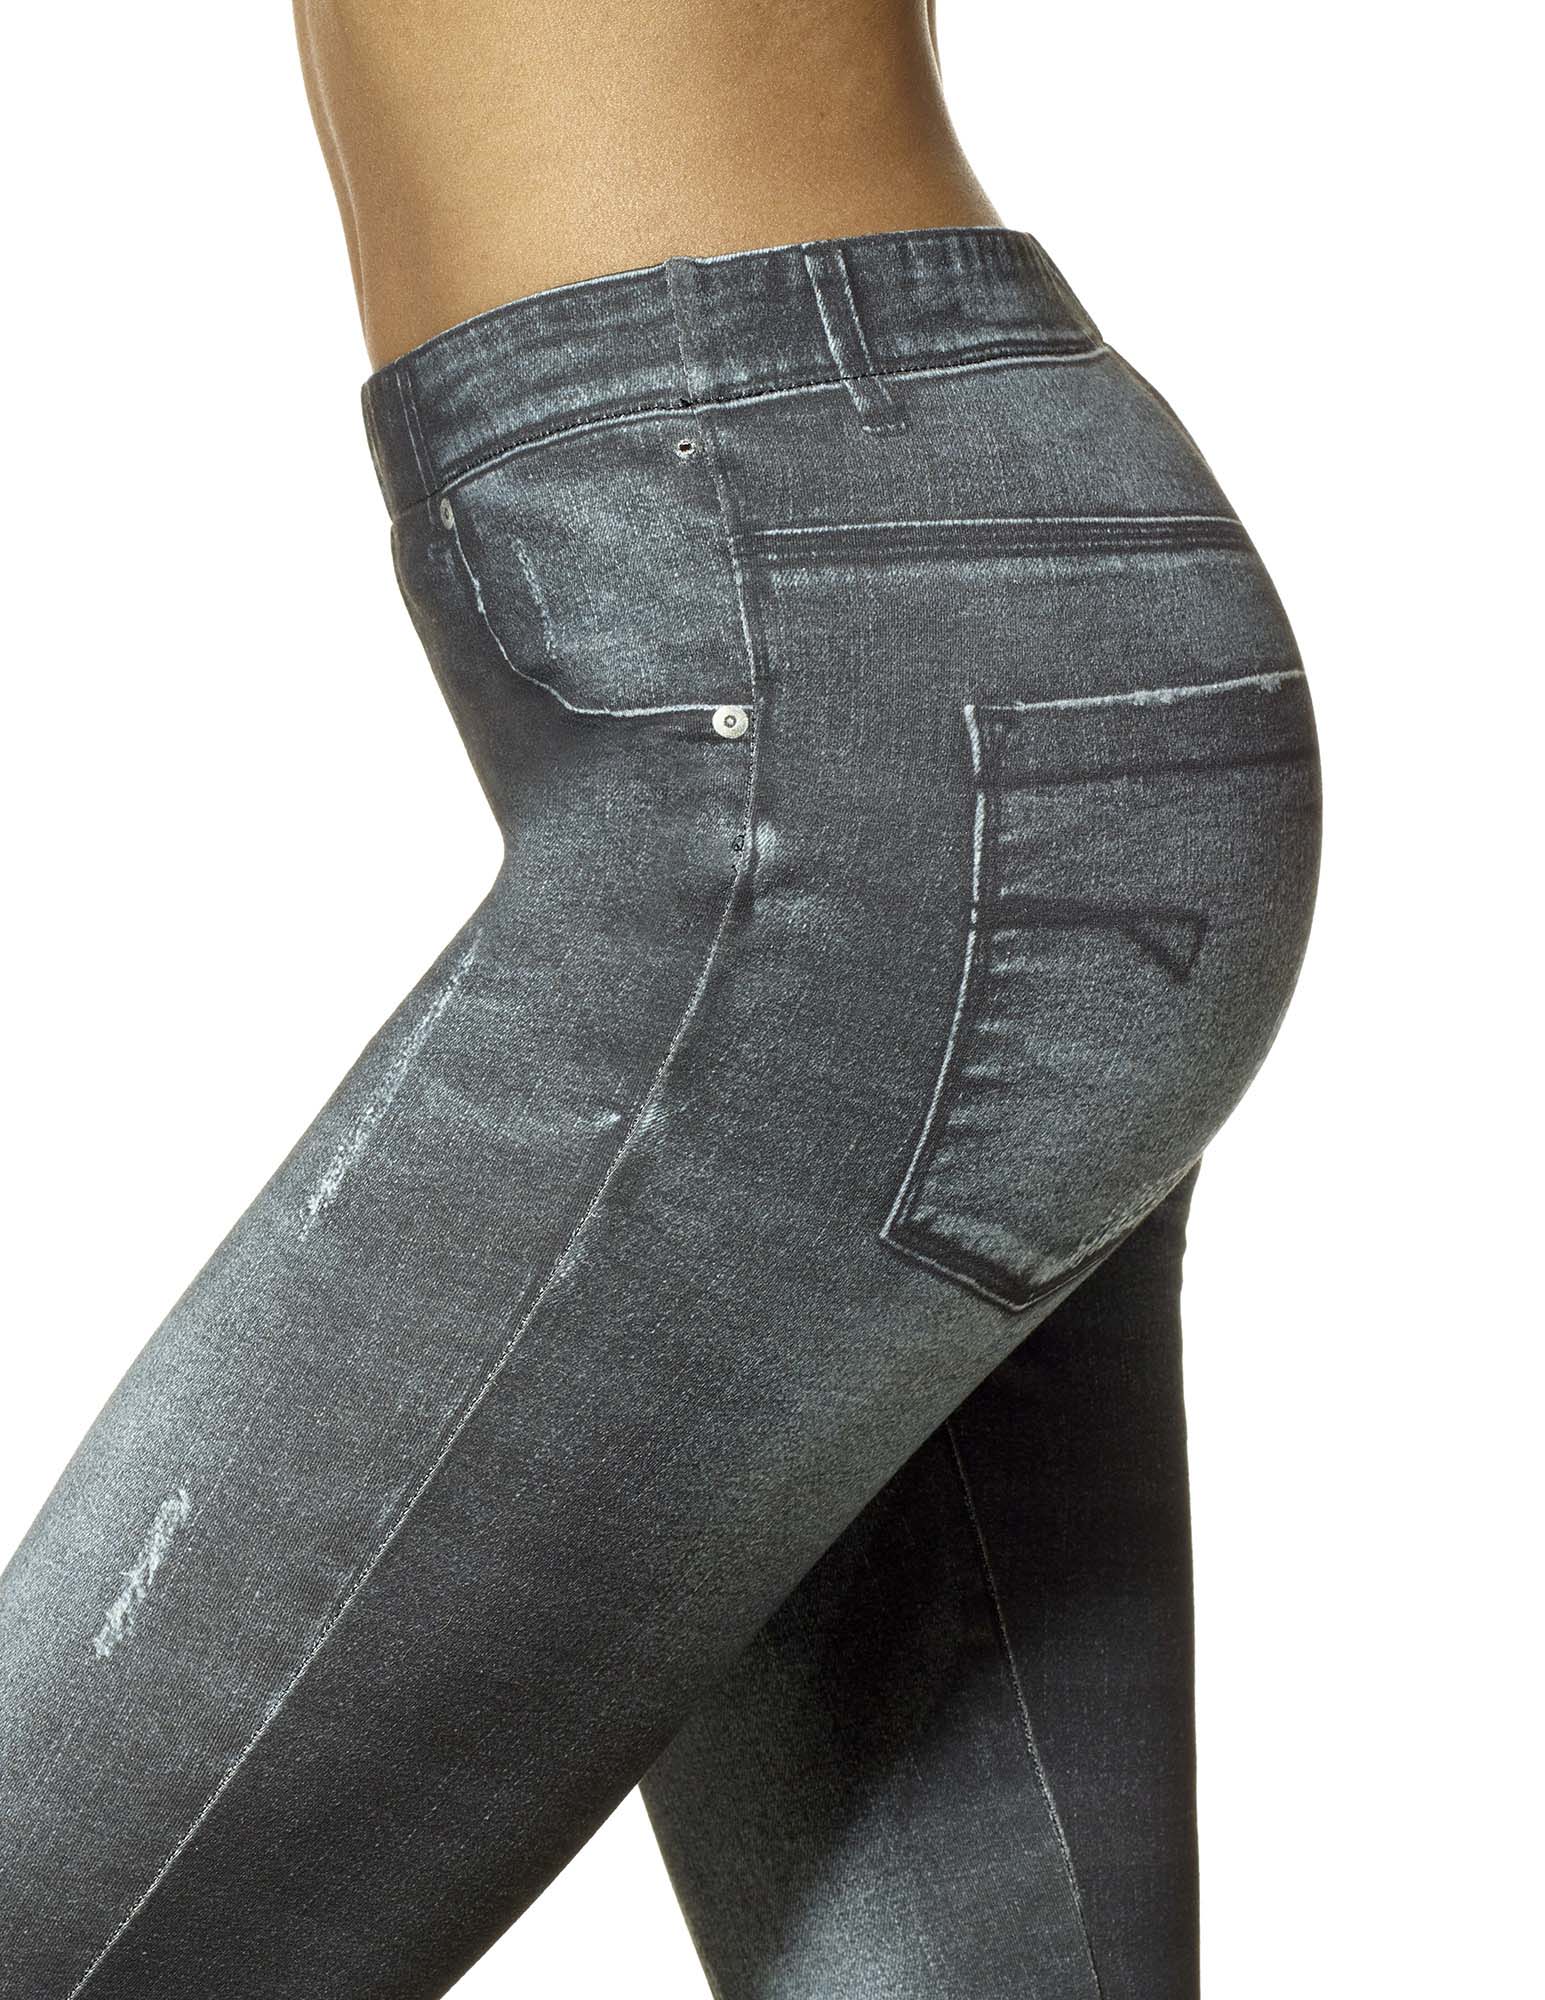 HUE Utopia denim jean leggings M NWOT!  Denim fashion, Leggings fashion,  Dressy jeans